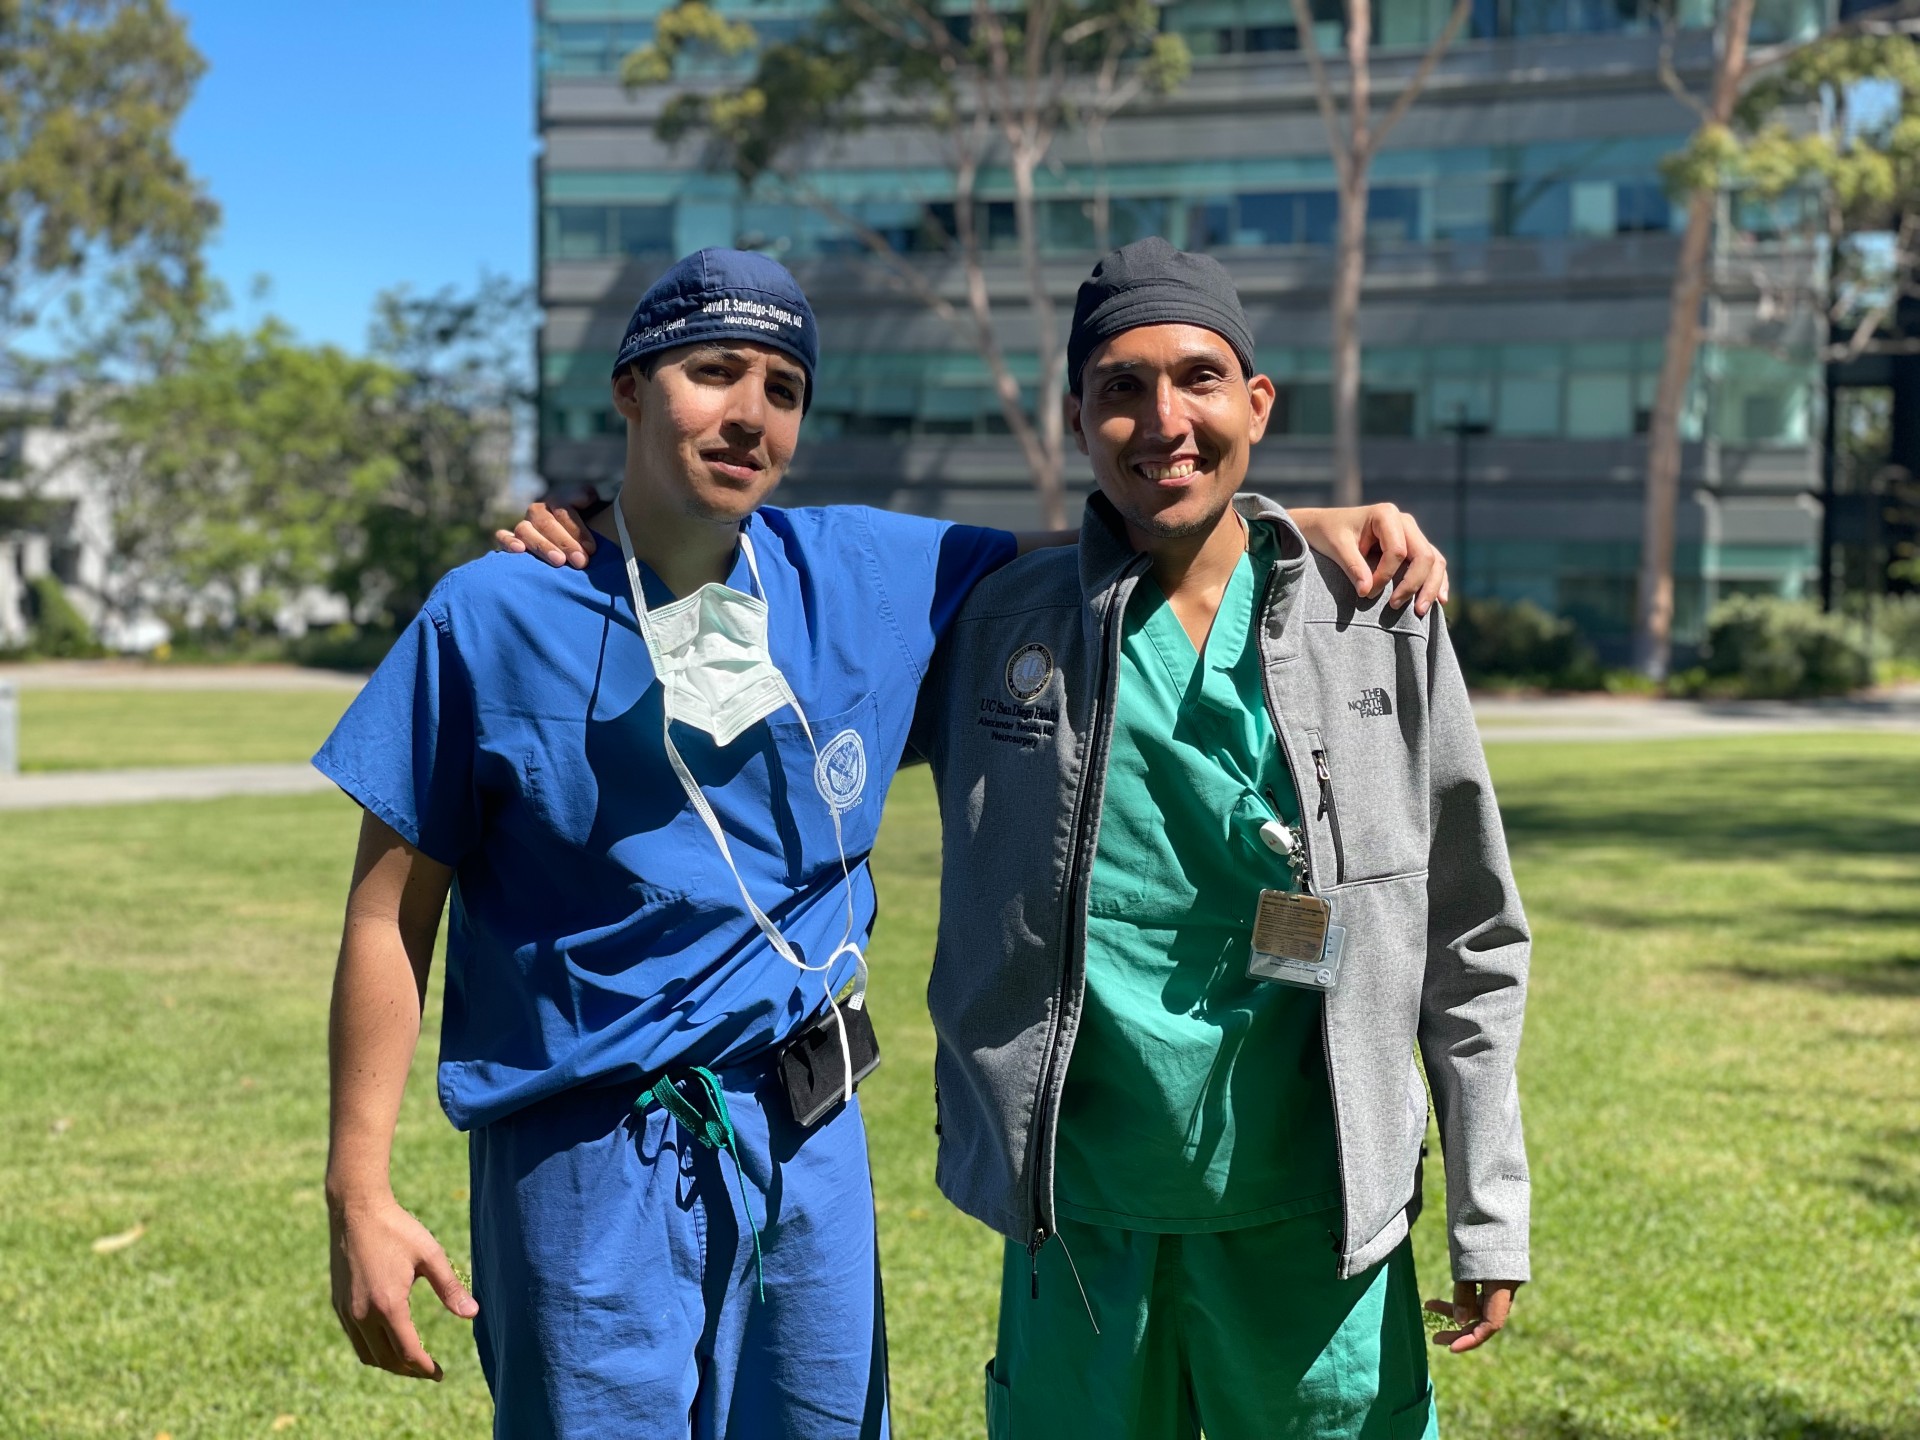 Hispanic neurosurgeons Drs. David Santiago-Dieppa and Alexander Tenorio standing together outside and wearing scrubs